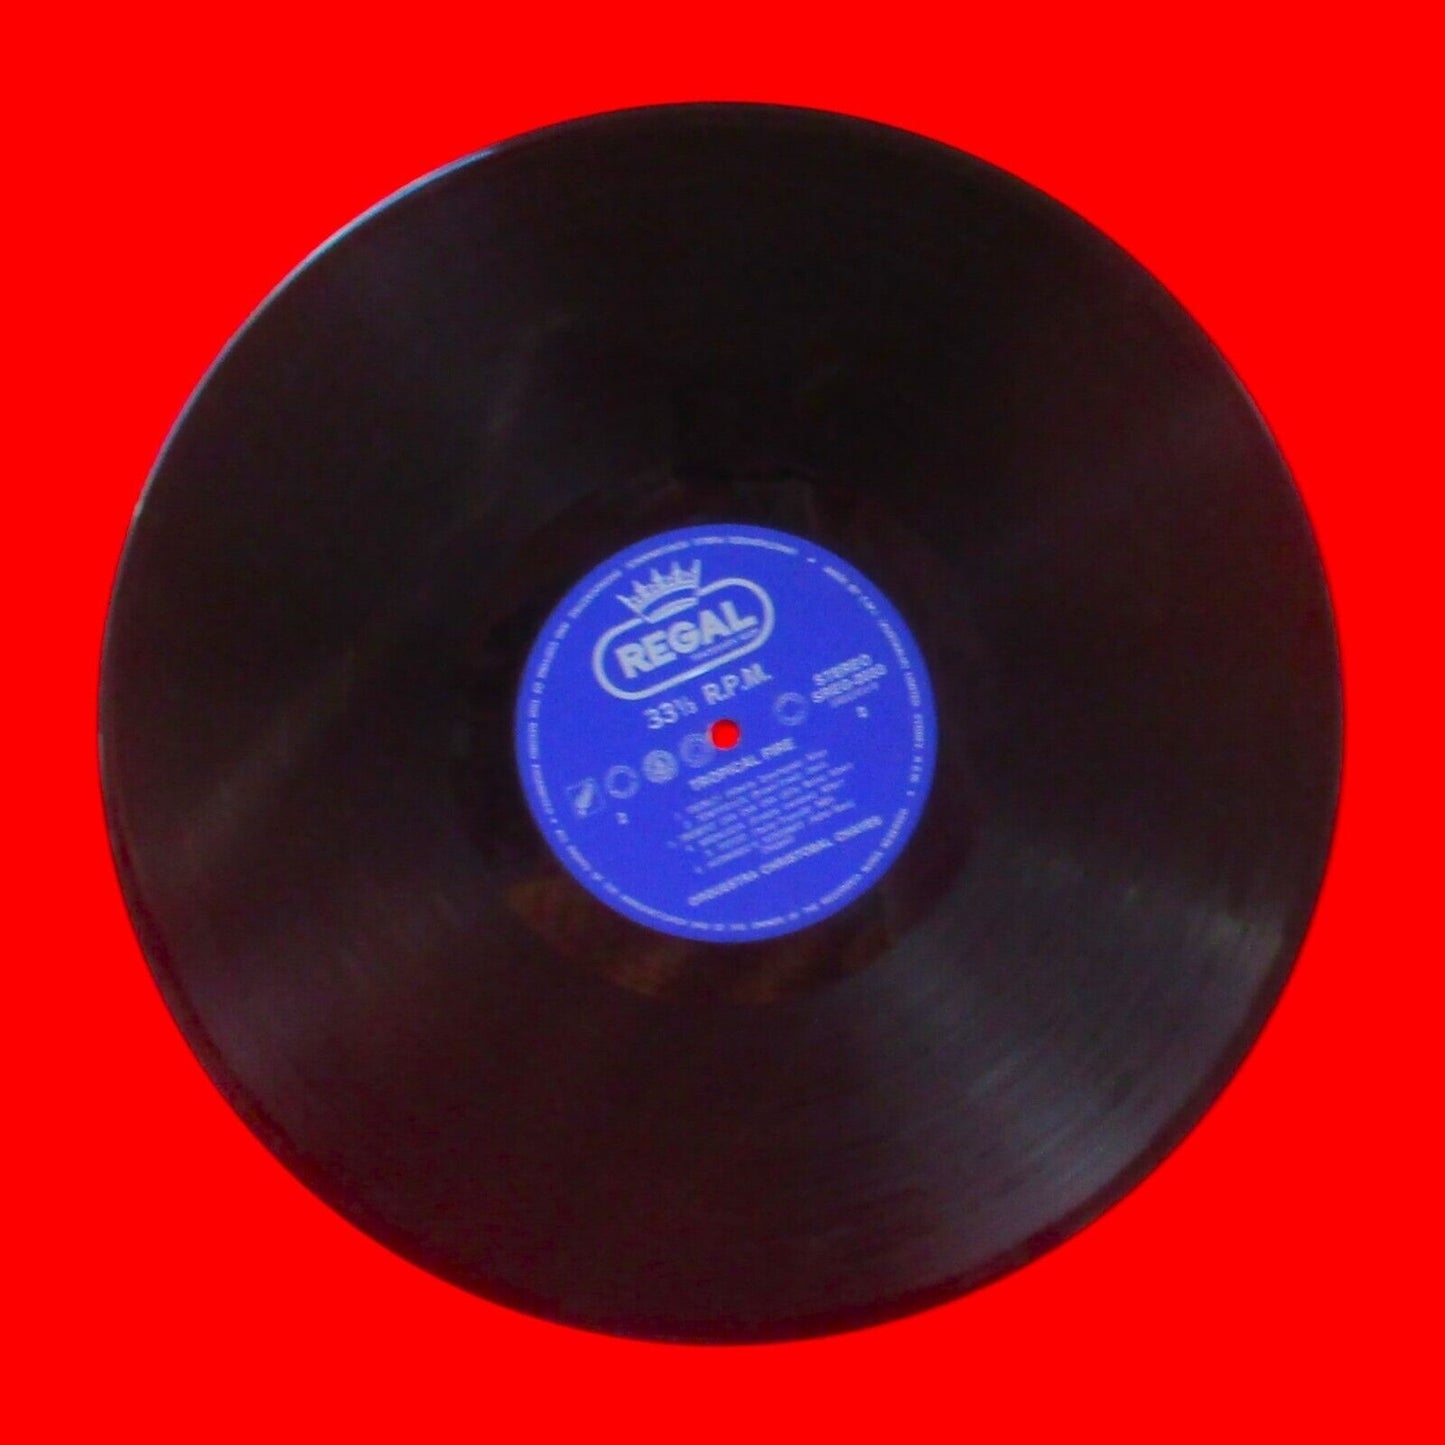 Orquestra Cristobal Chavez Tropical Fire Vinyl Album LP 1967 Australian Latin